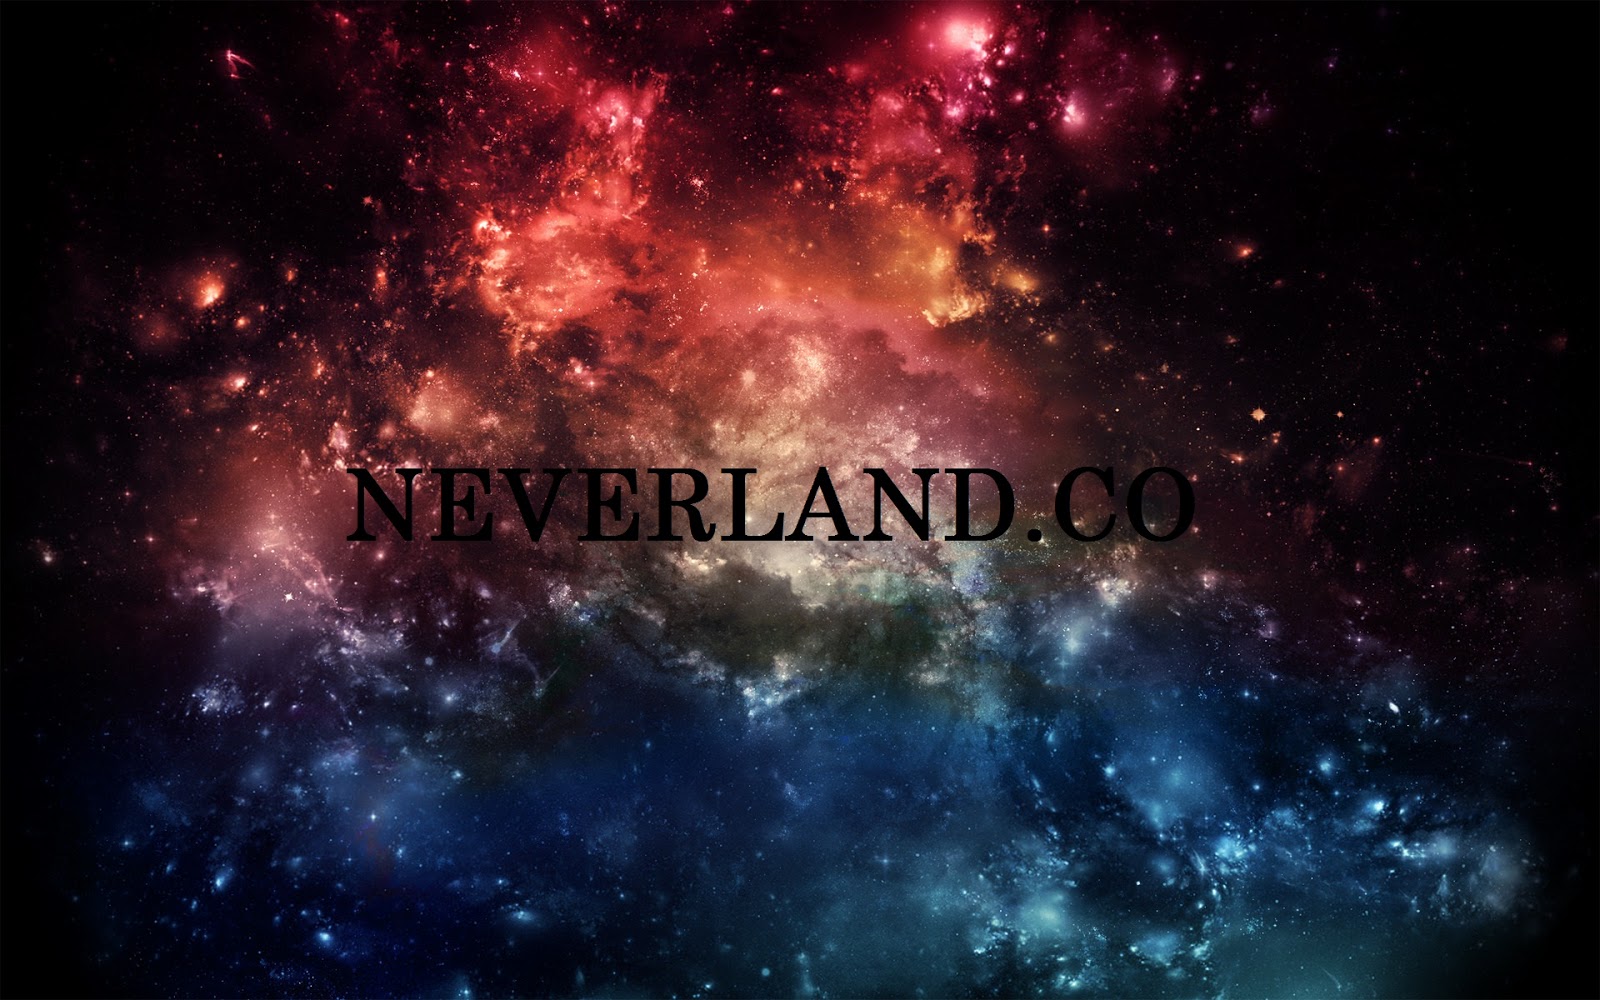 Take Me To Neverland Galaxy